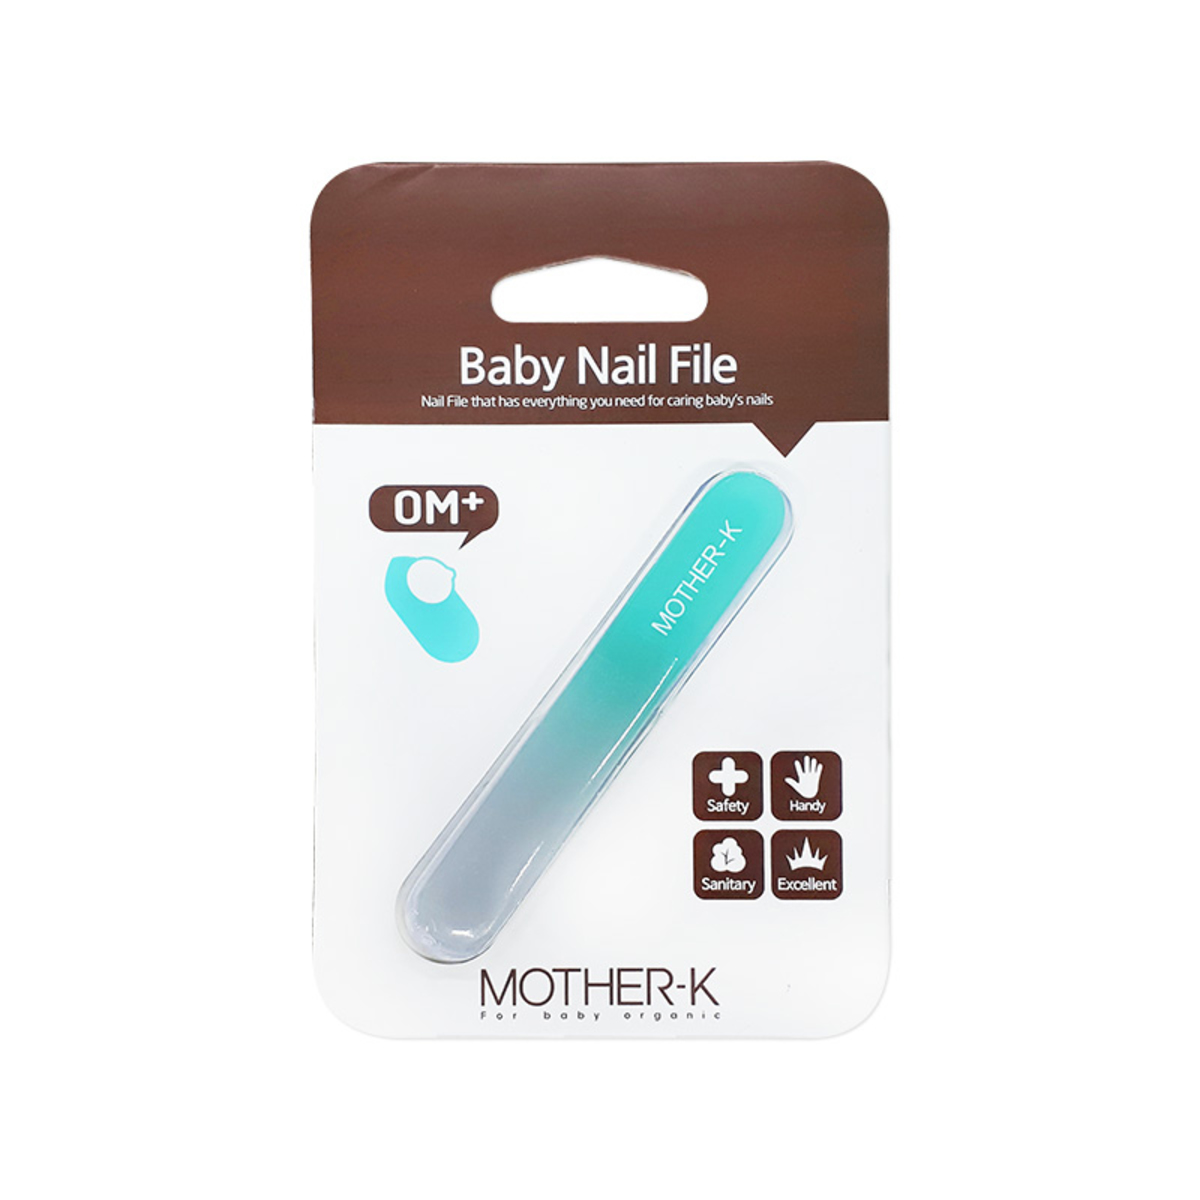 Mother-K 新生兒專用指甲挫(0m+)